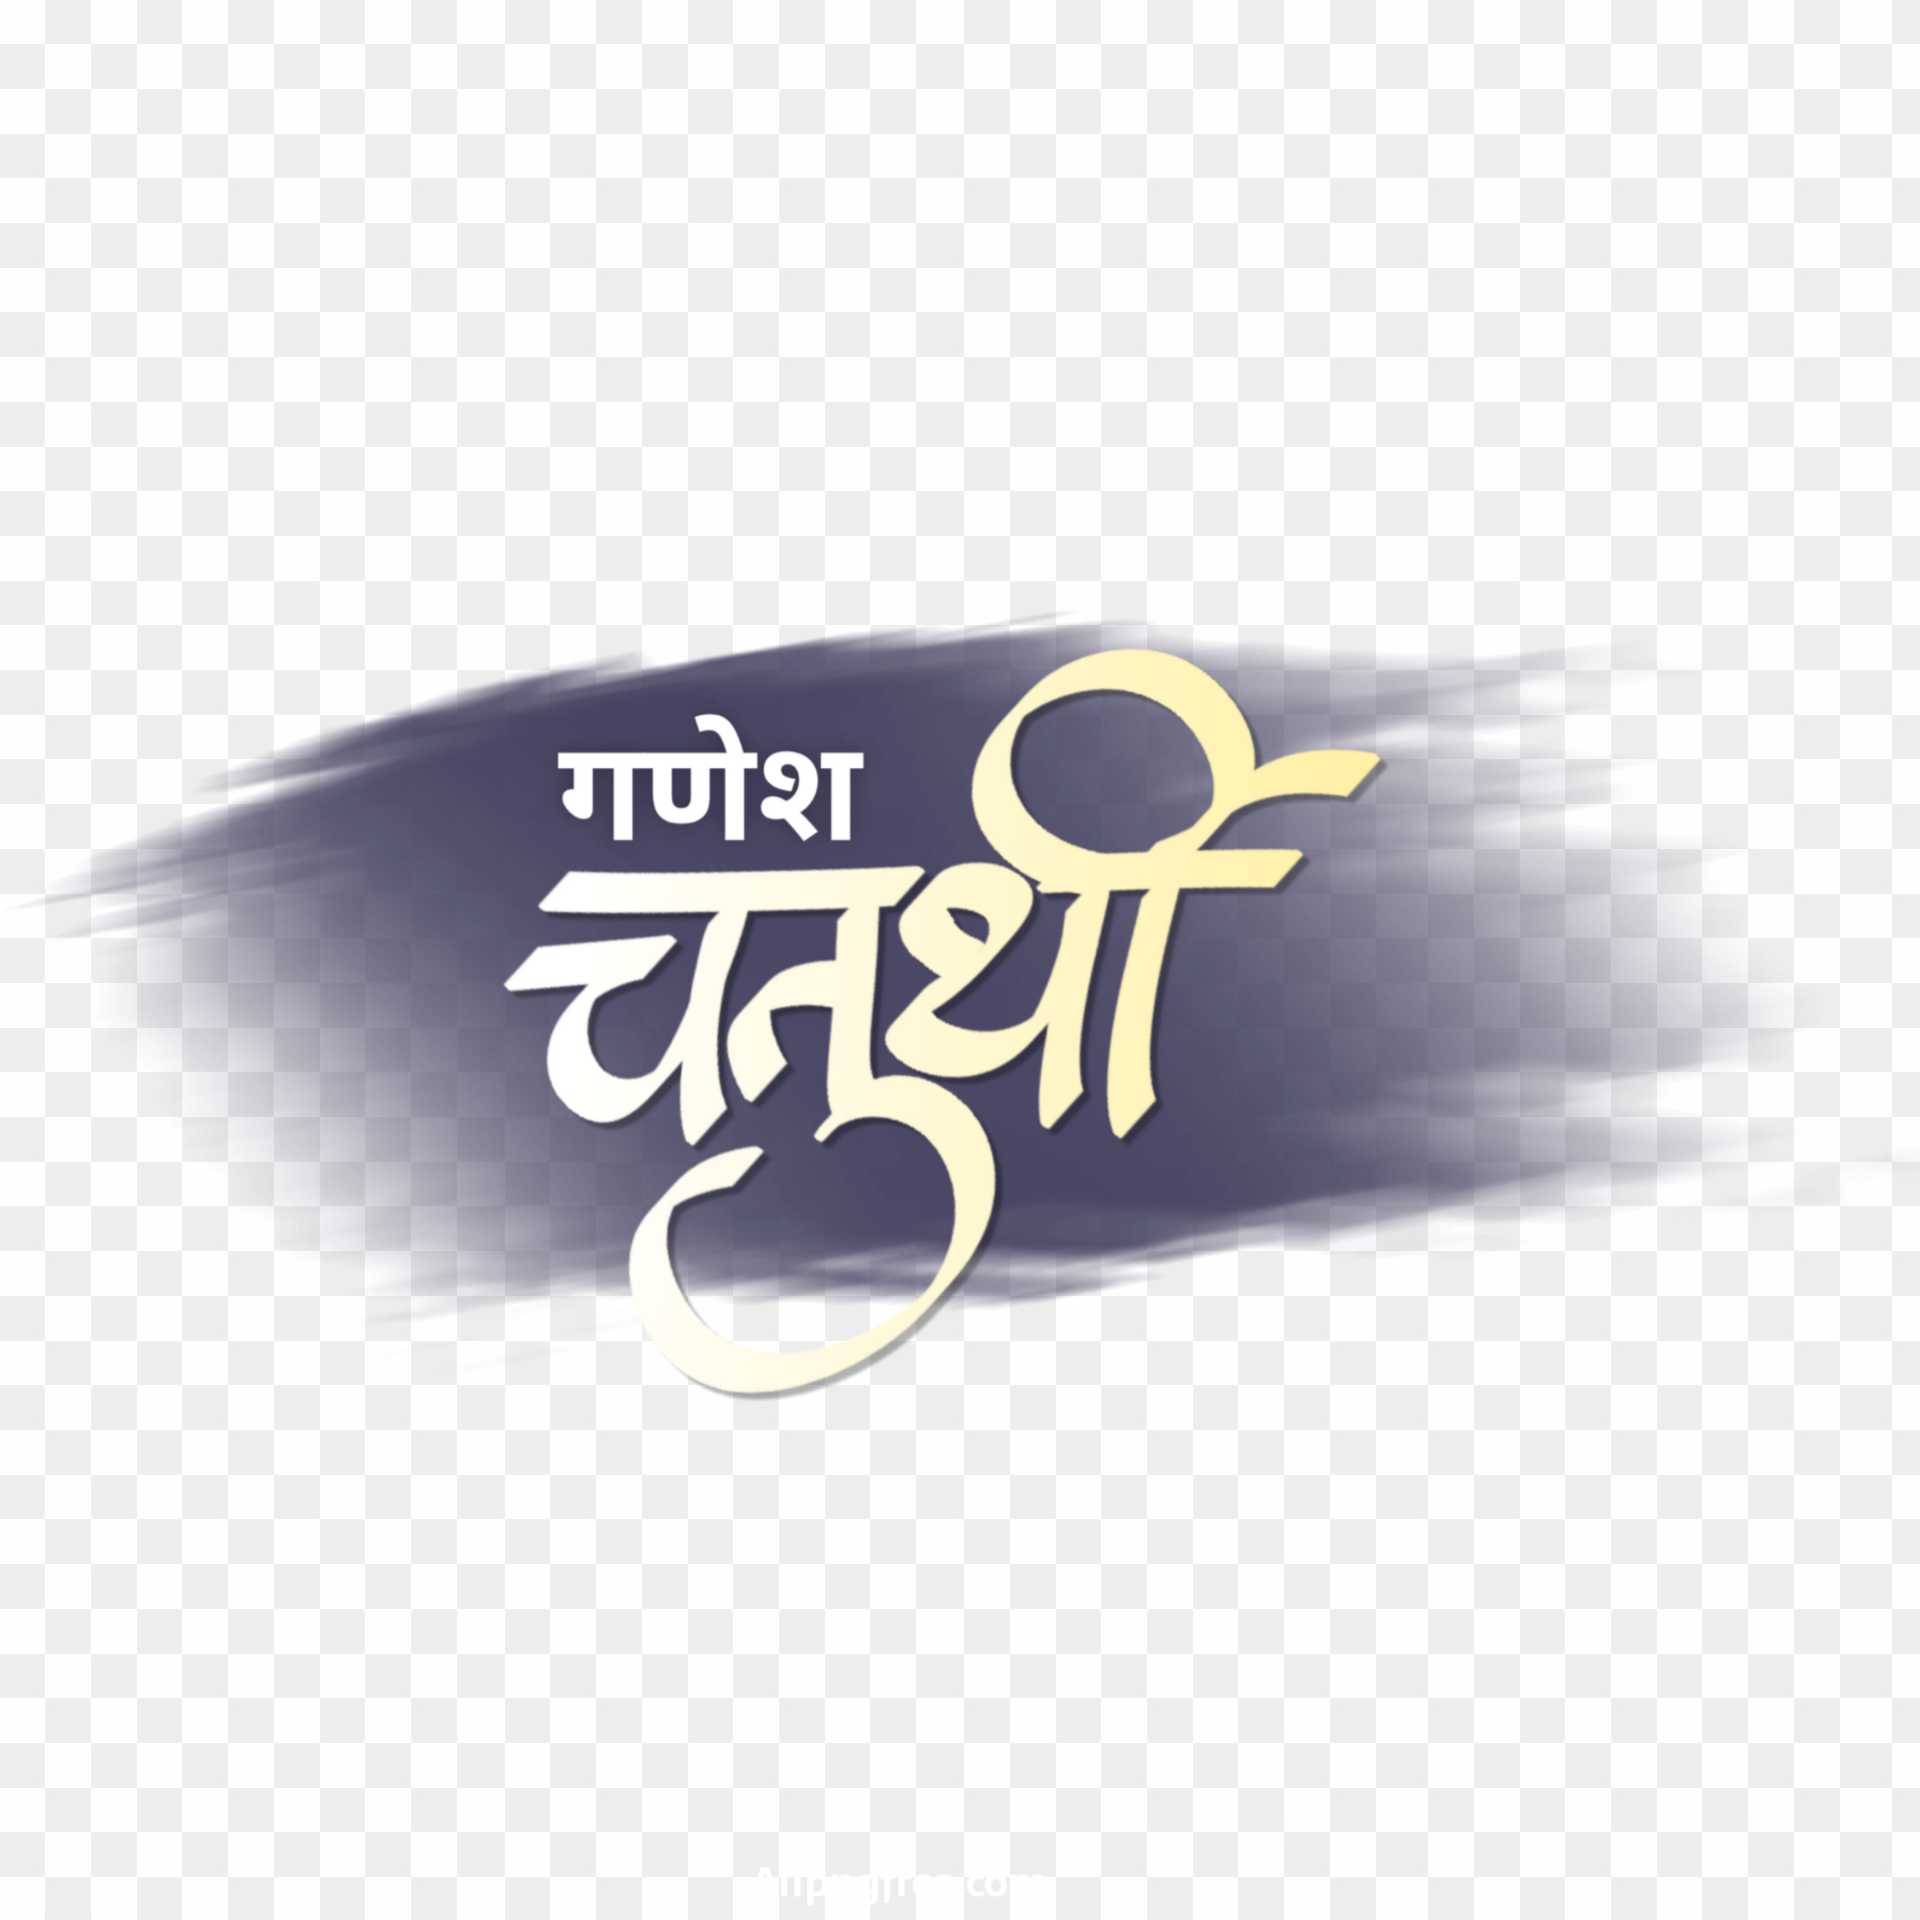 Ganesh chaturthi PNG transparent image - transparent background PNG  cliparts free download | AllPNGFree